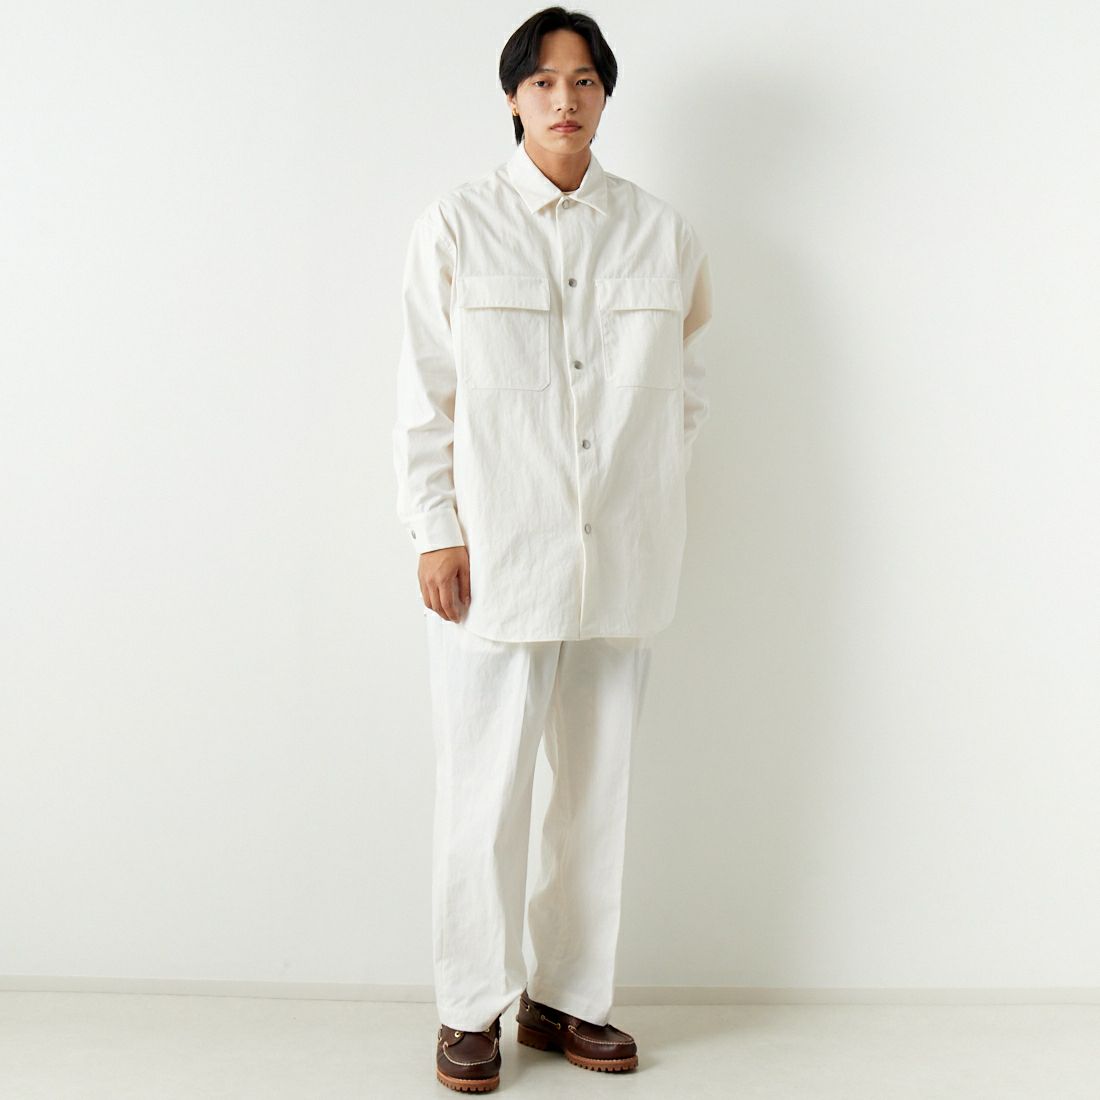 ATELIER BETON [アトリエベトン] チノクロスオーバーシャツ [241-06C] WHITE &&モデル身長：179cm 着用サイズ：4&&